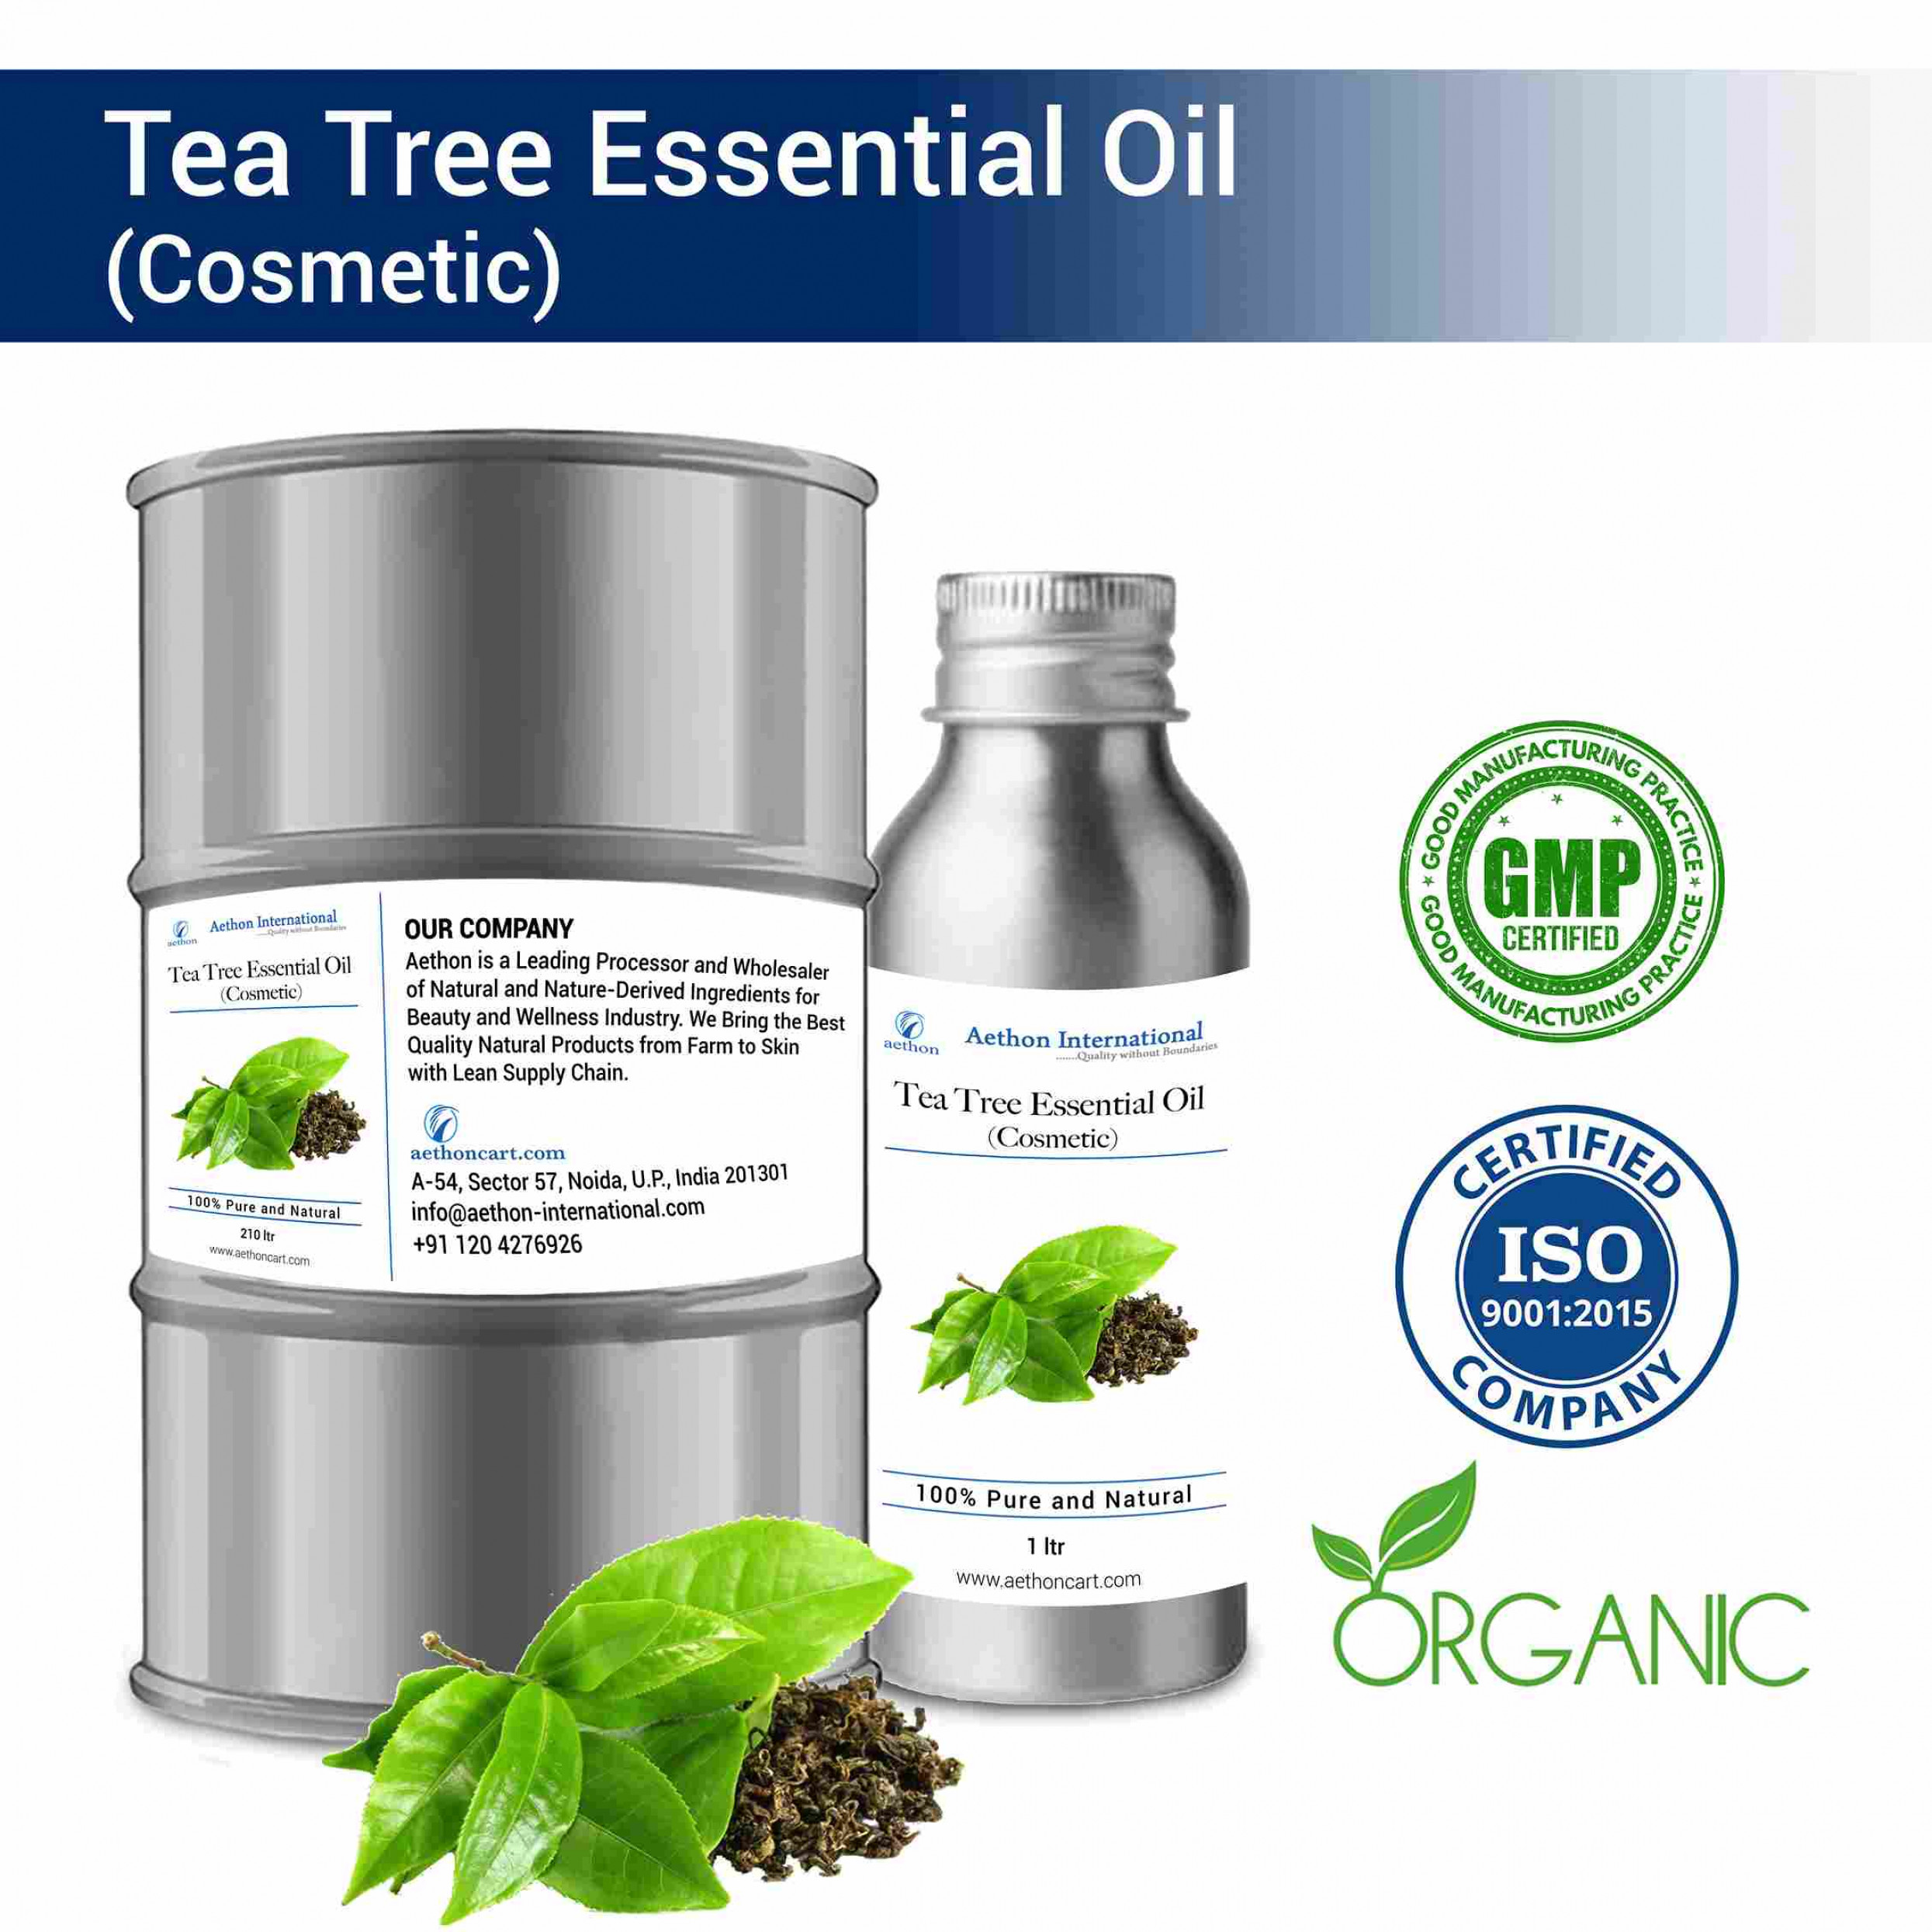 Tea Tree Essential Oil (Cosmetic)